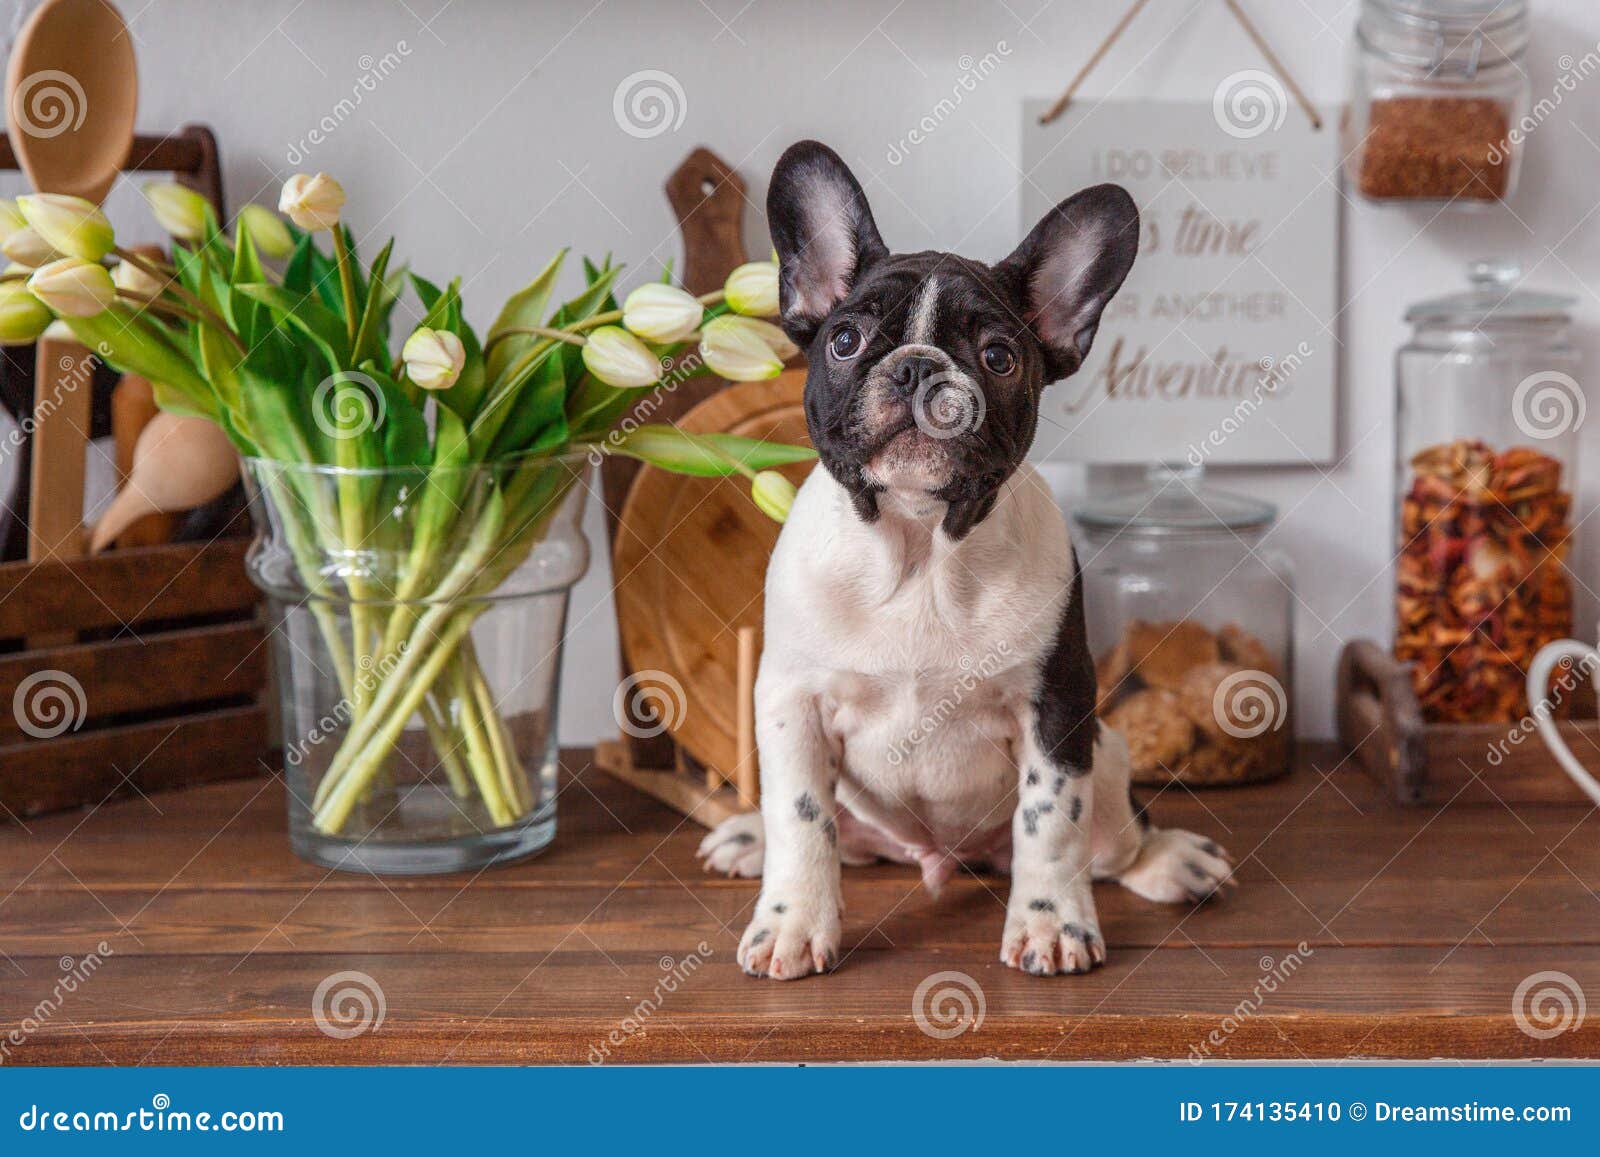 French Bulldog Puppy Sitting, Spring Decorations, Studio Stock Photo ...